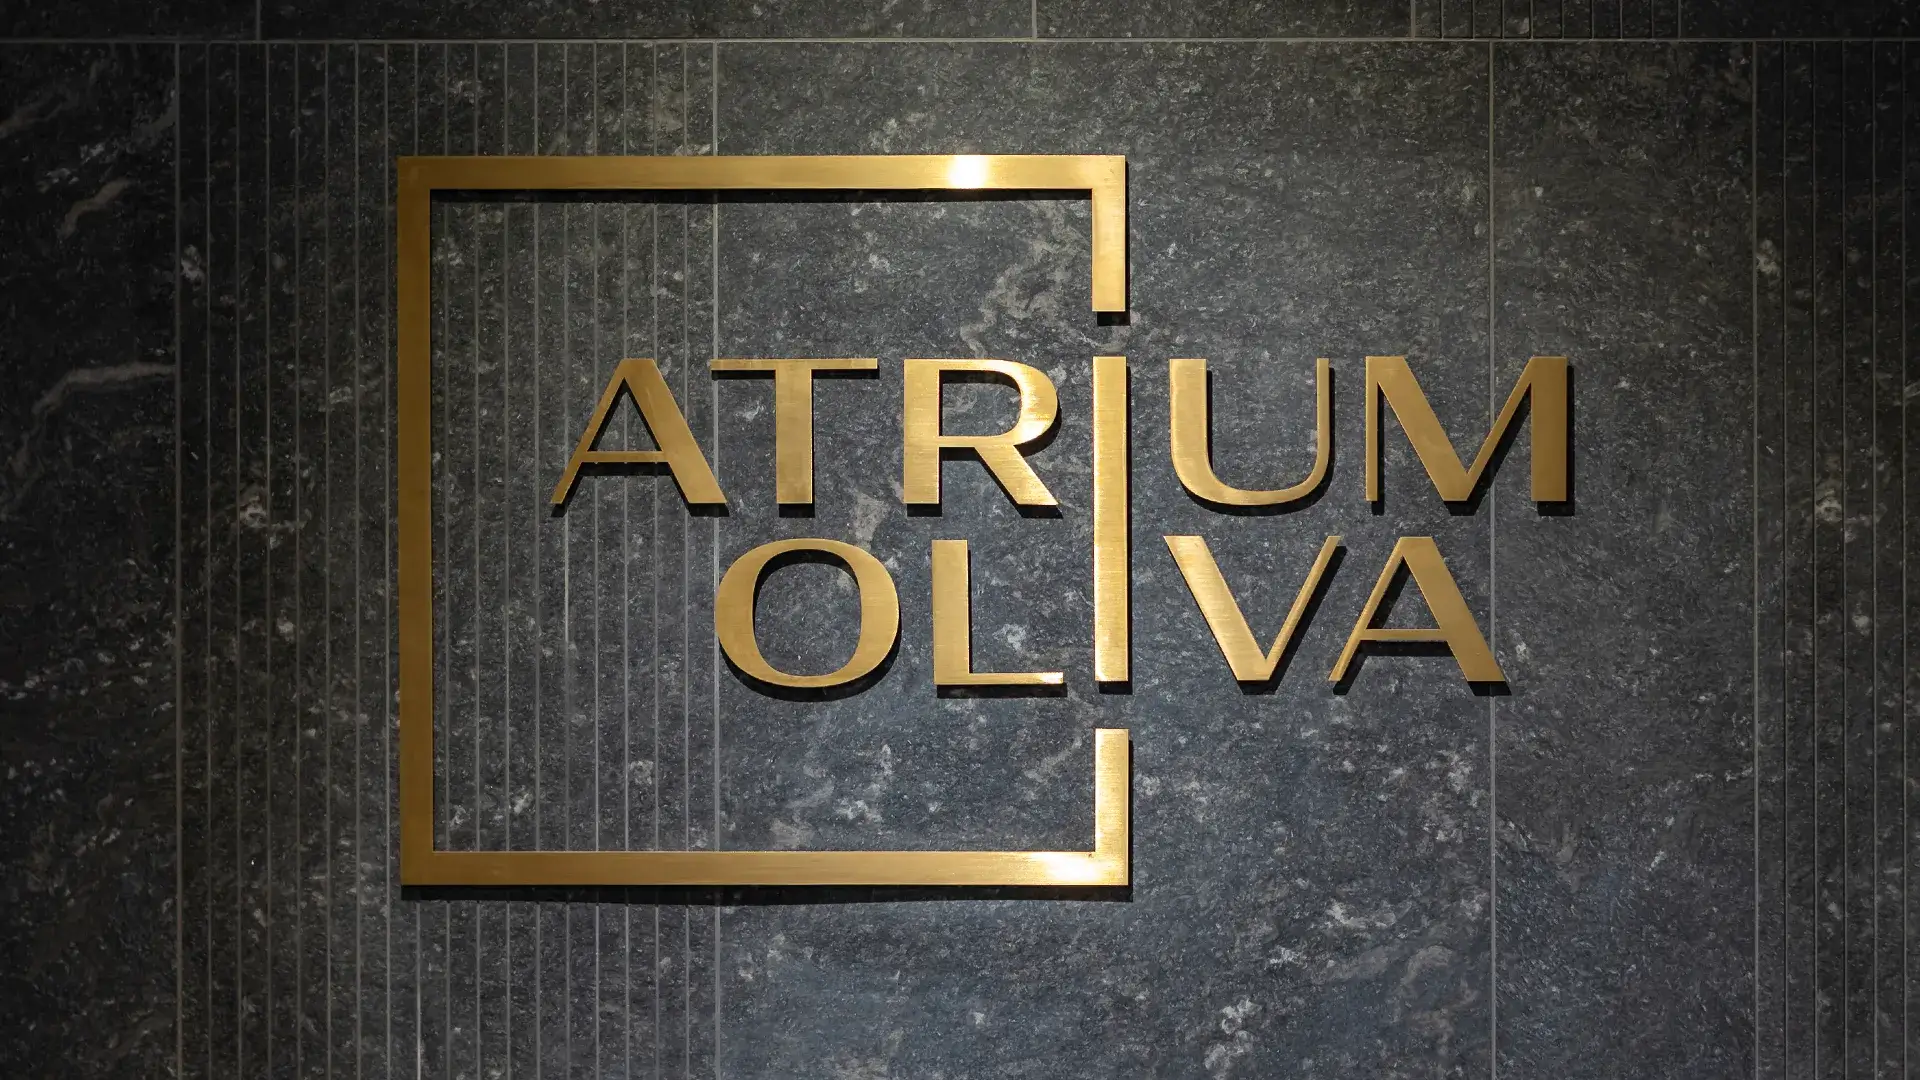 Atrium Oliva flat letters in brushed sheet metal